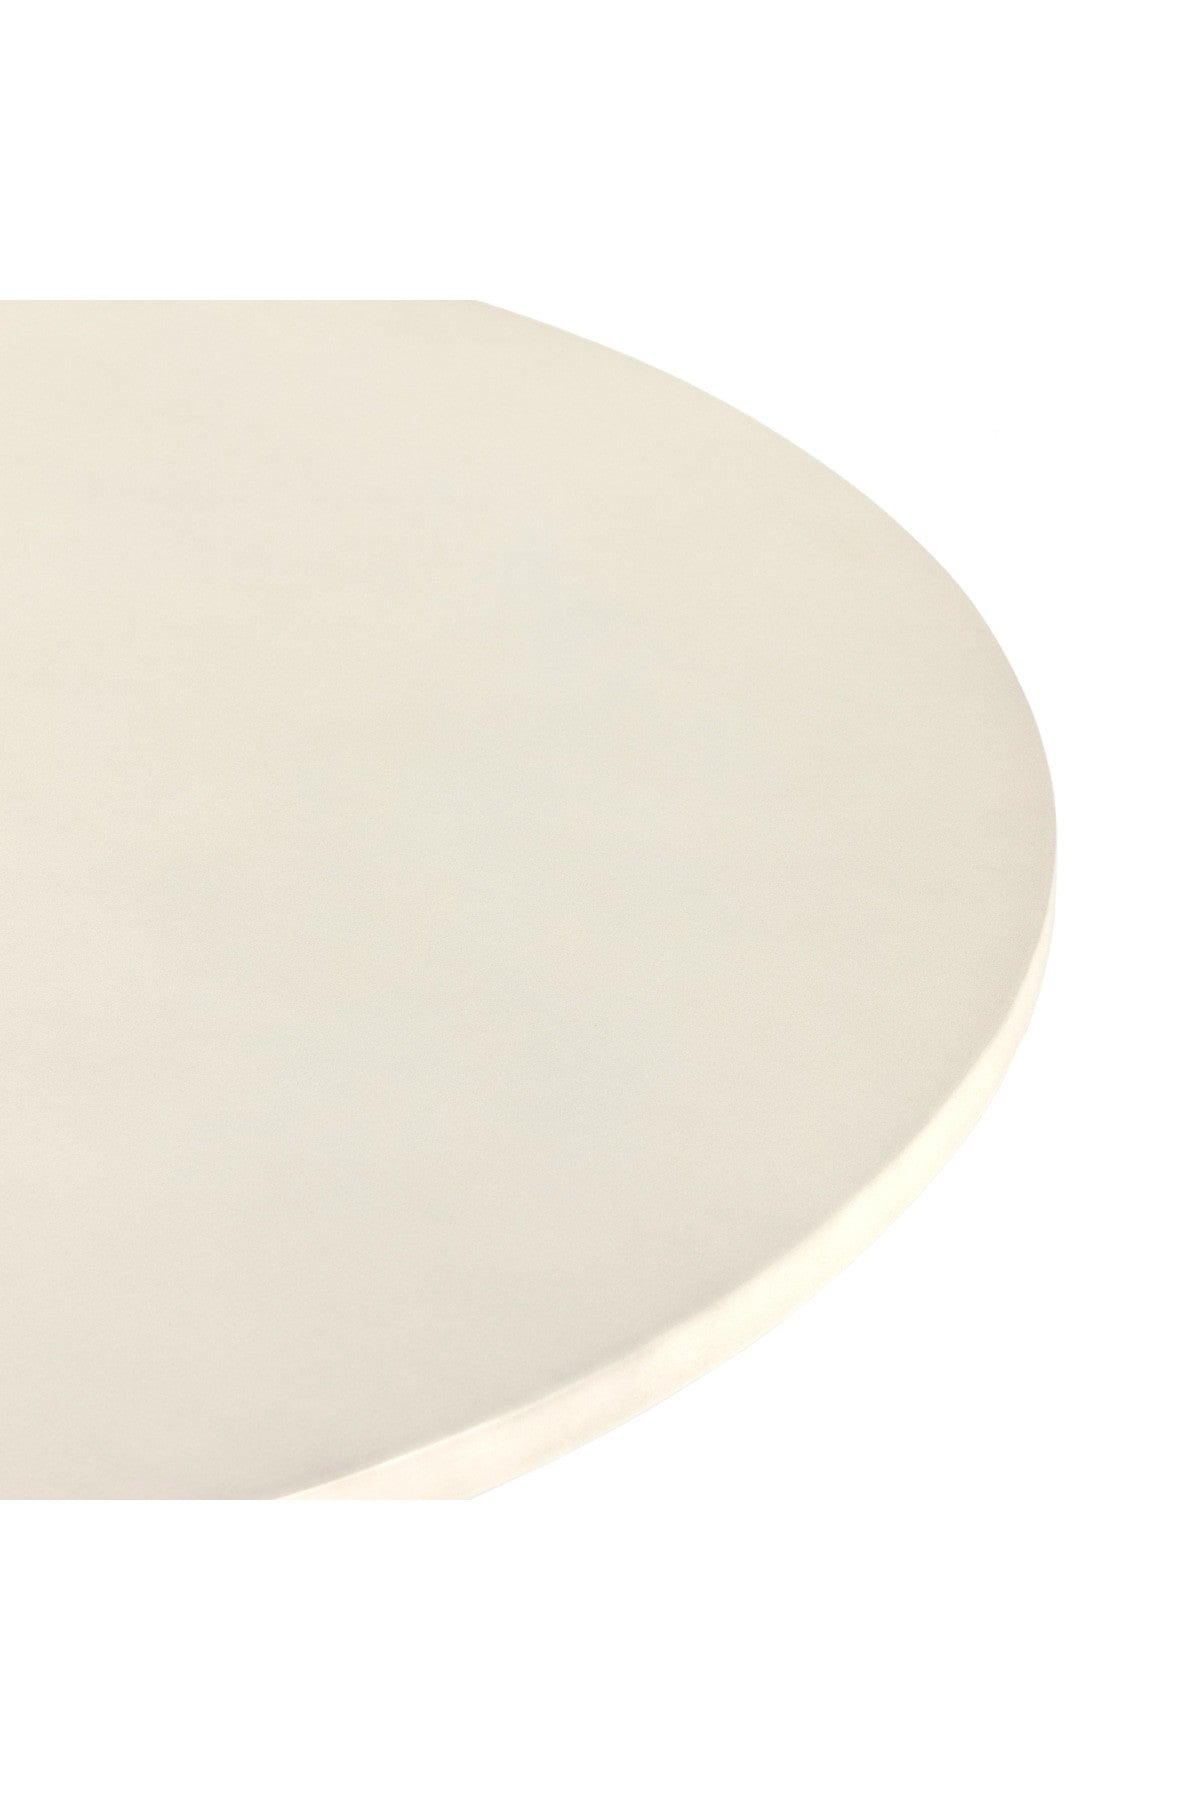 Frisco Coffee Table - White Concrete